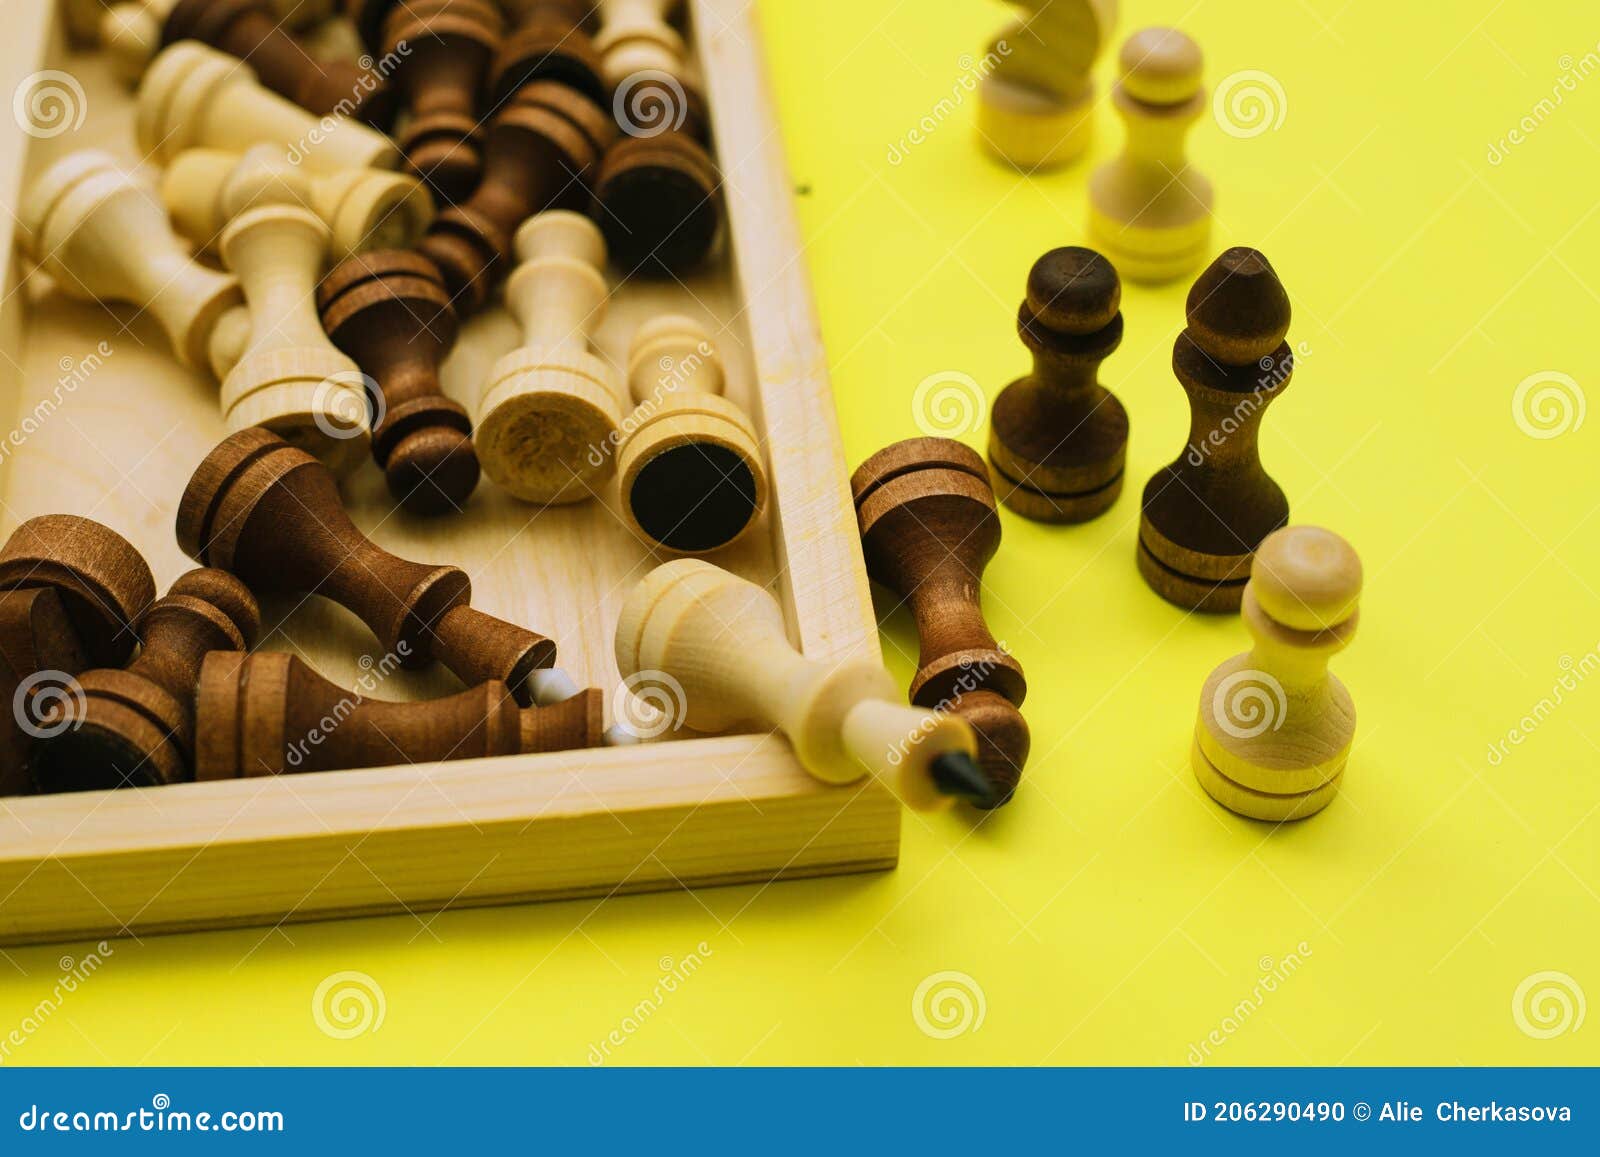 diferente  Xadrez jogo, Design xadrez, Peças de xadrez